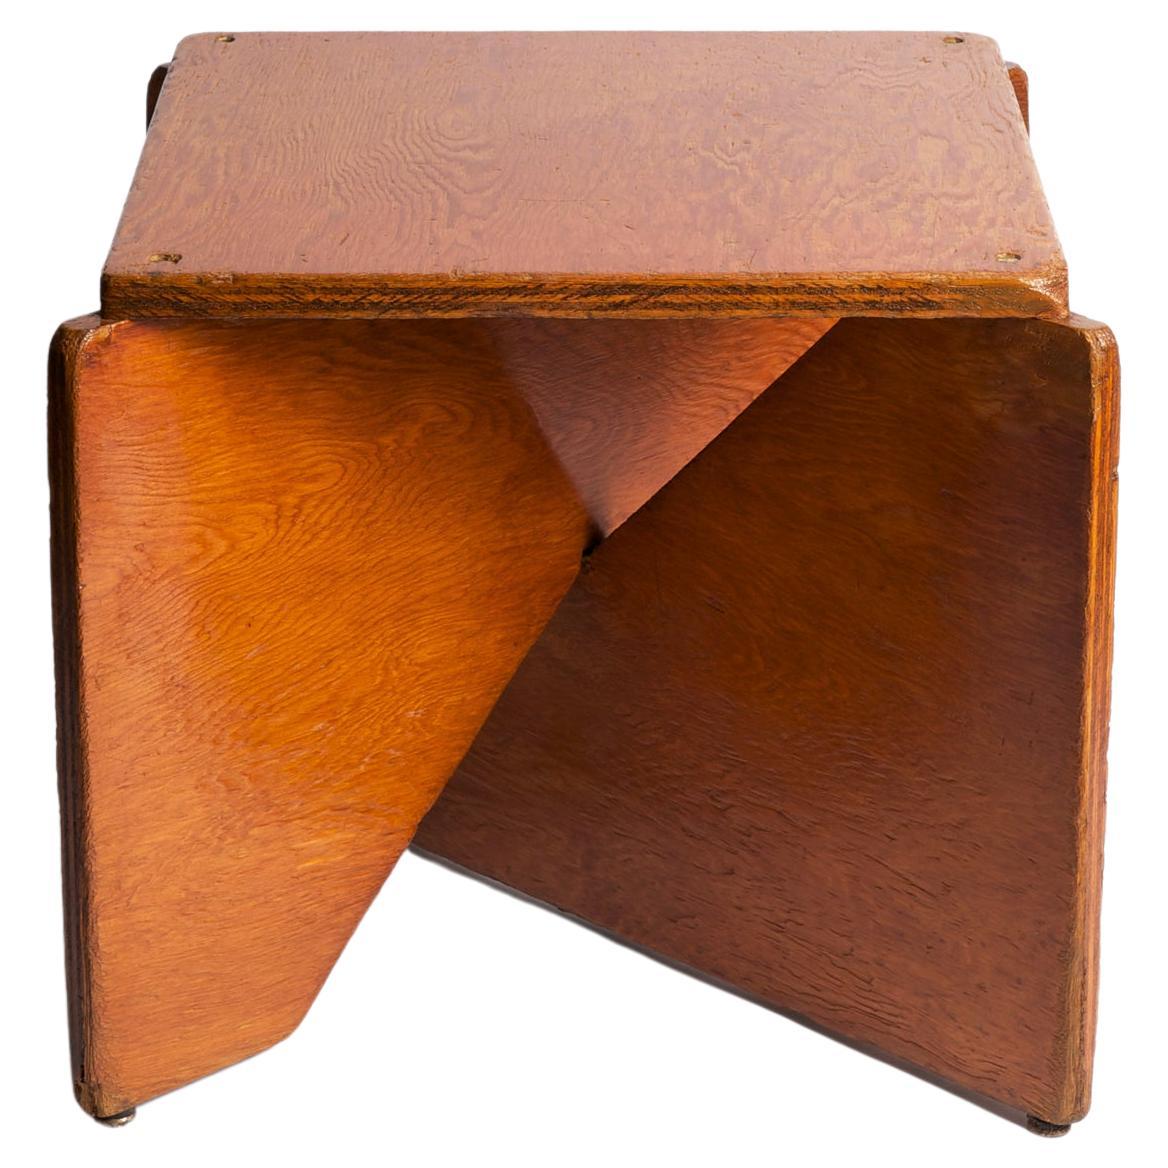 Hervé Baley, Wooden stool, c. 1970 For Sale